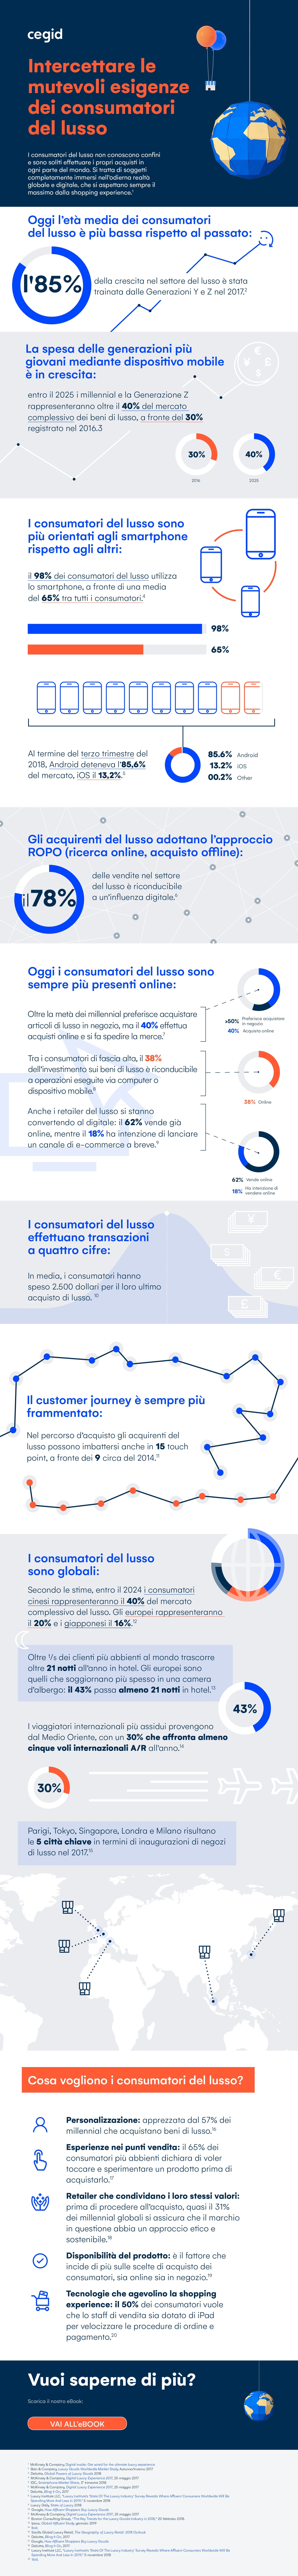 Infografica_Clienti_Lusso_Retail